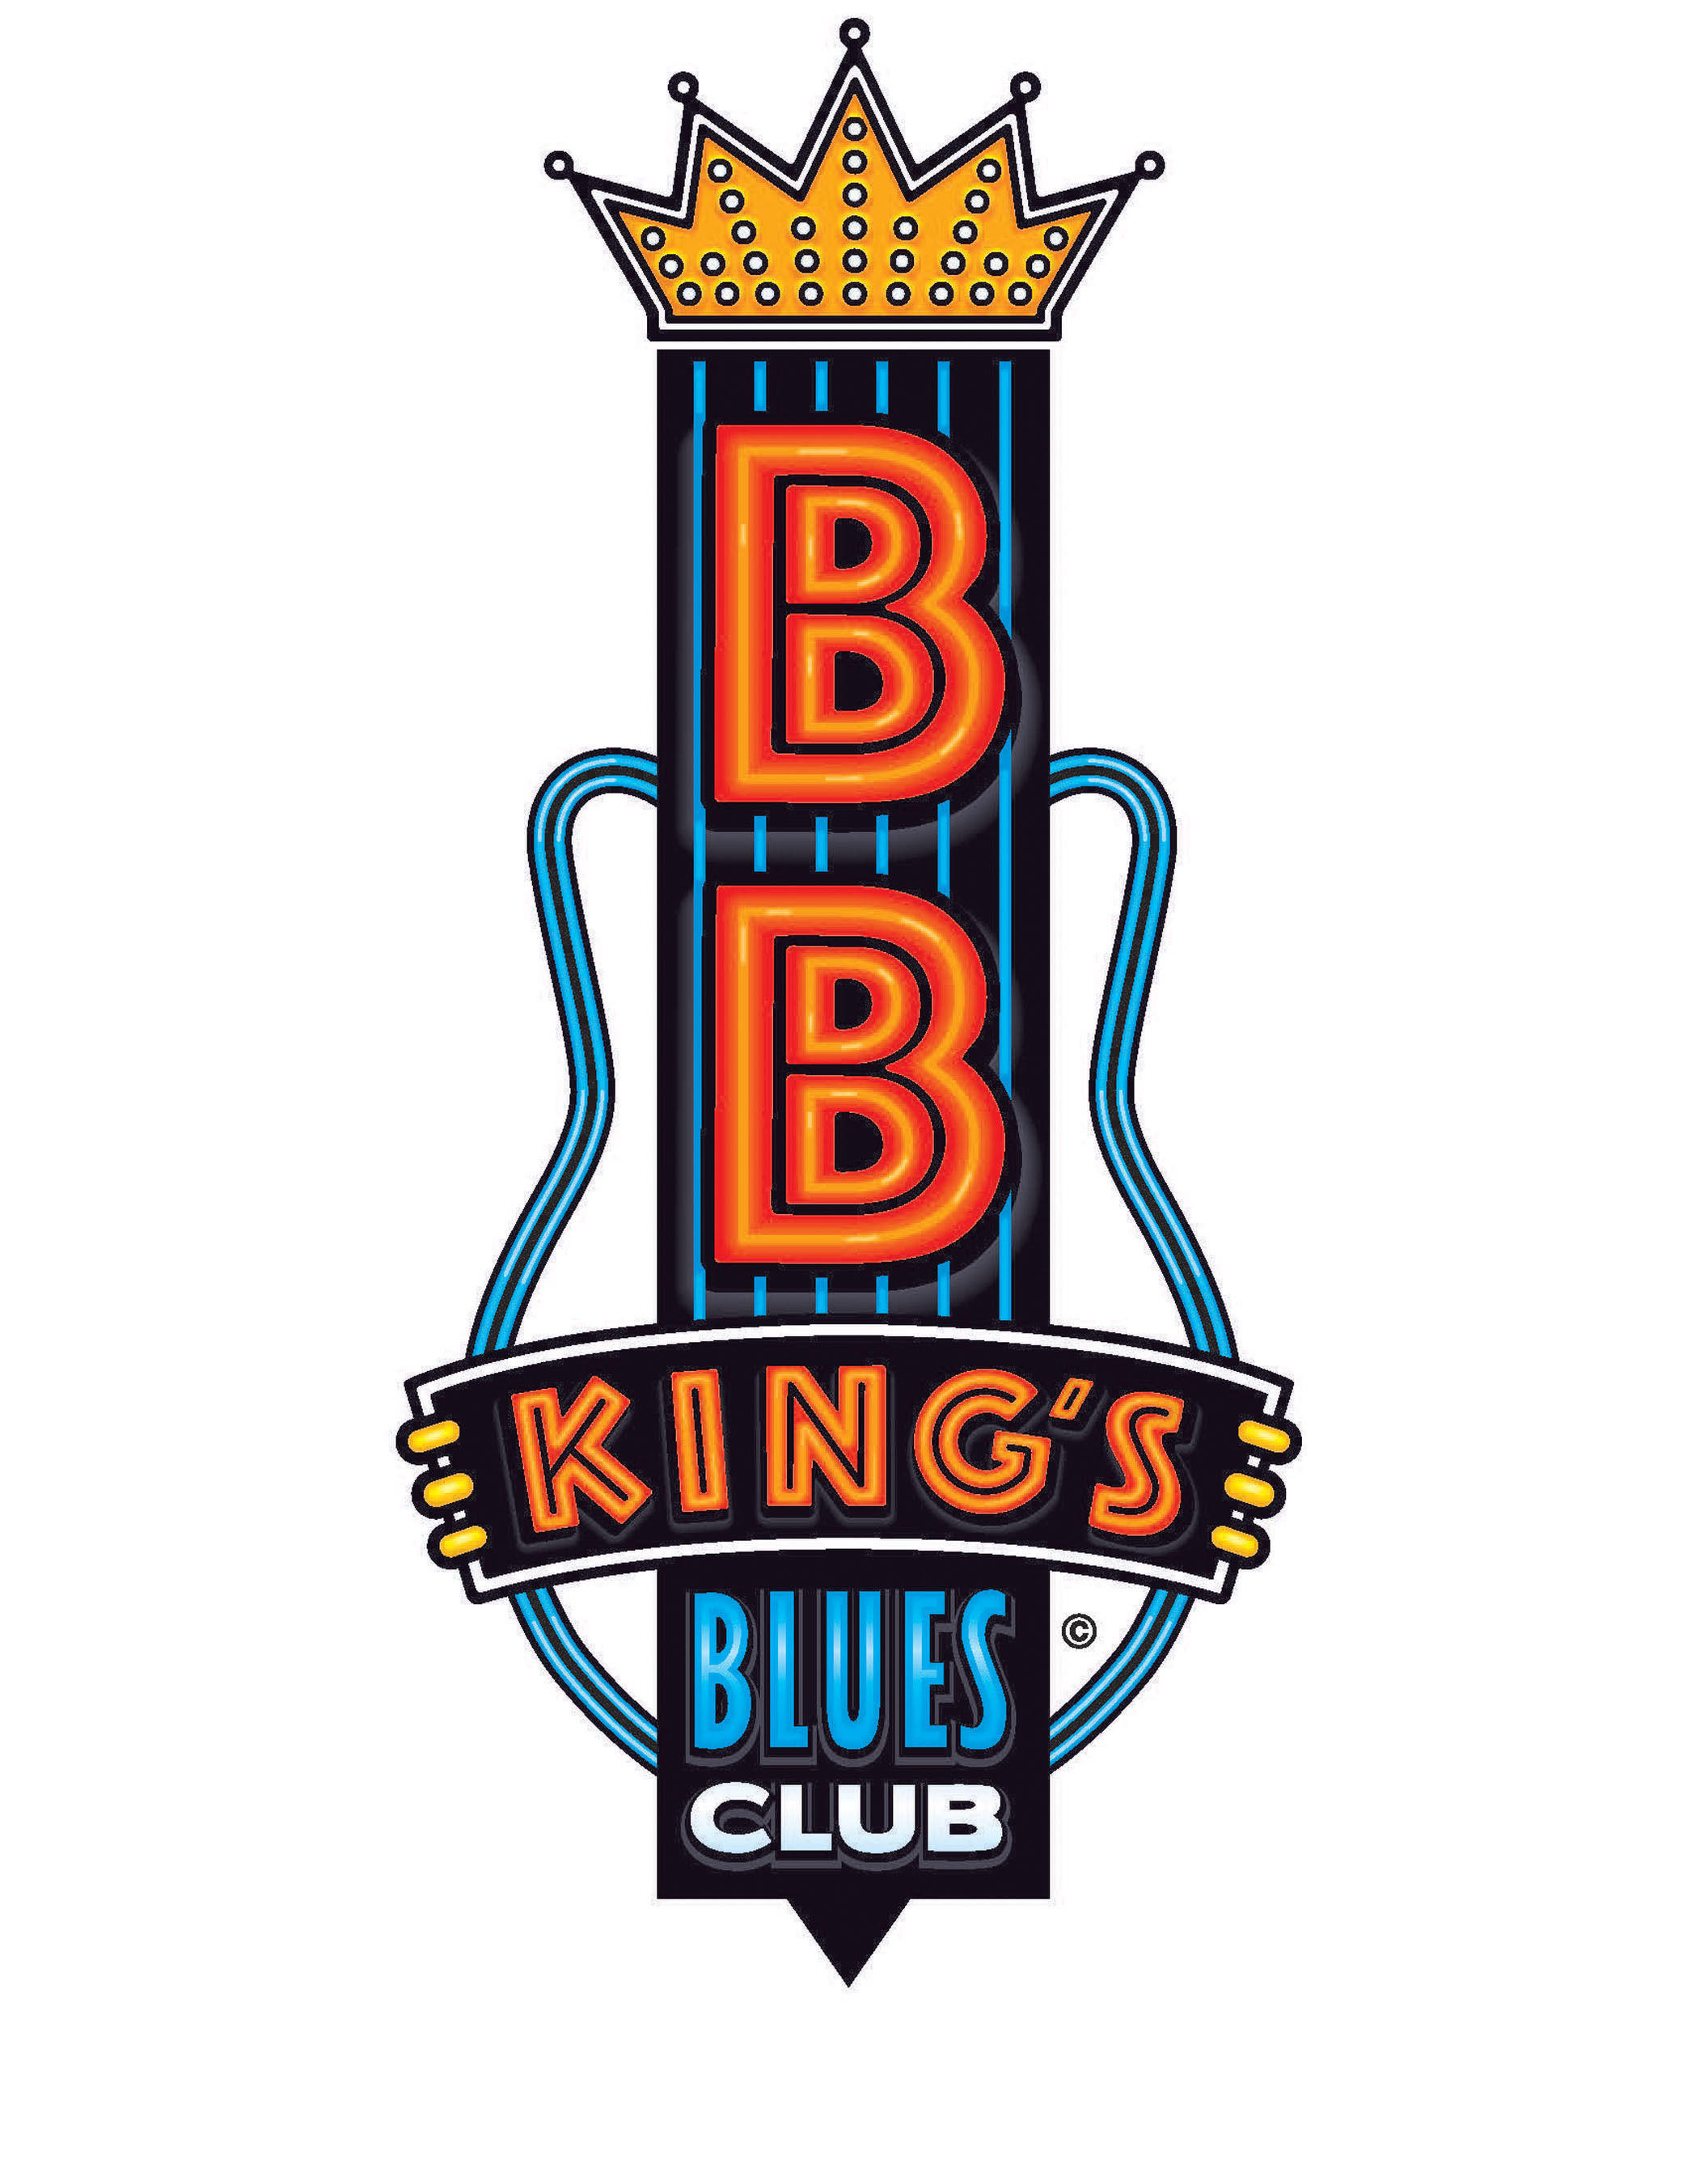 B.B. King's Blues Club.